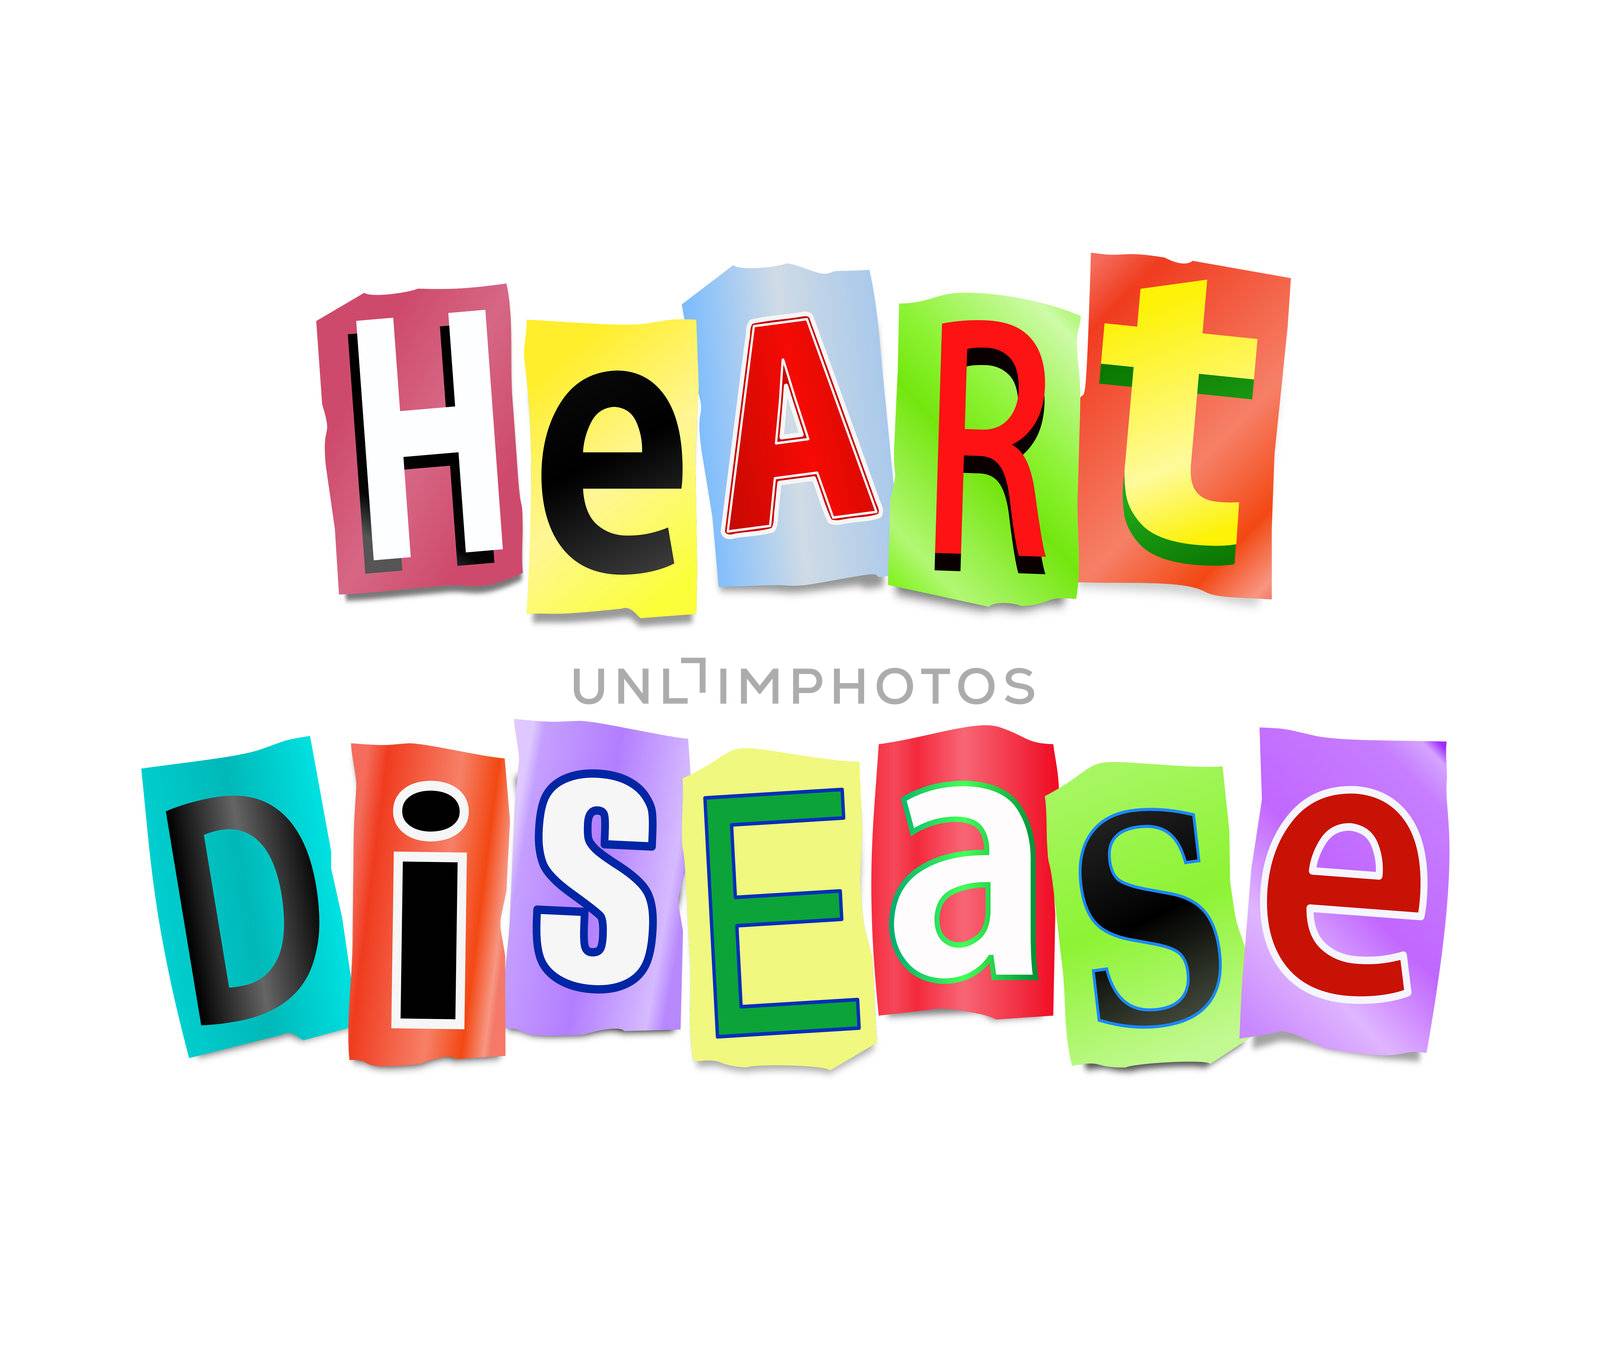 Heart disease concept. by 72soul